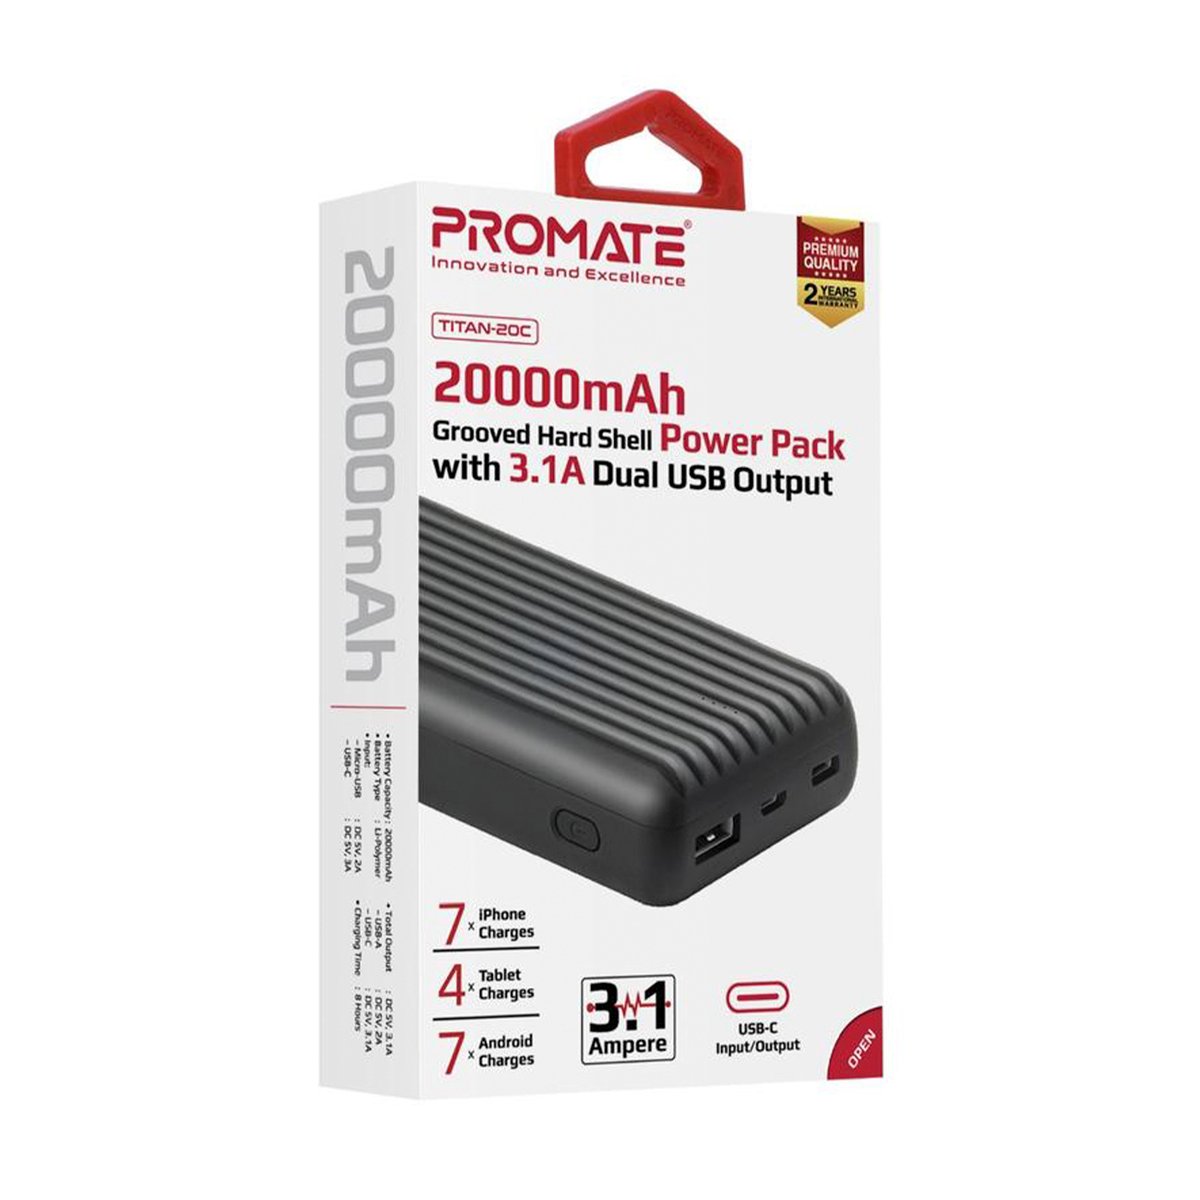 Promate 20000mAh High-Capacity Power Bank with 3.1A Dual USB Output TITAN-20C